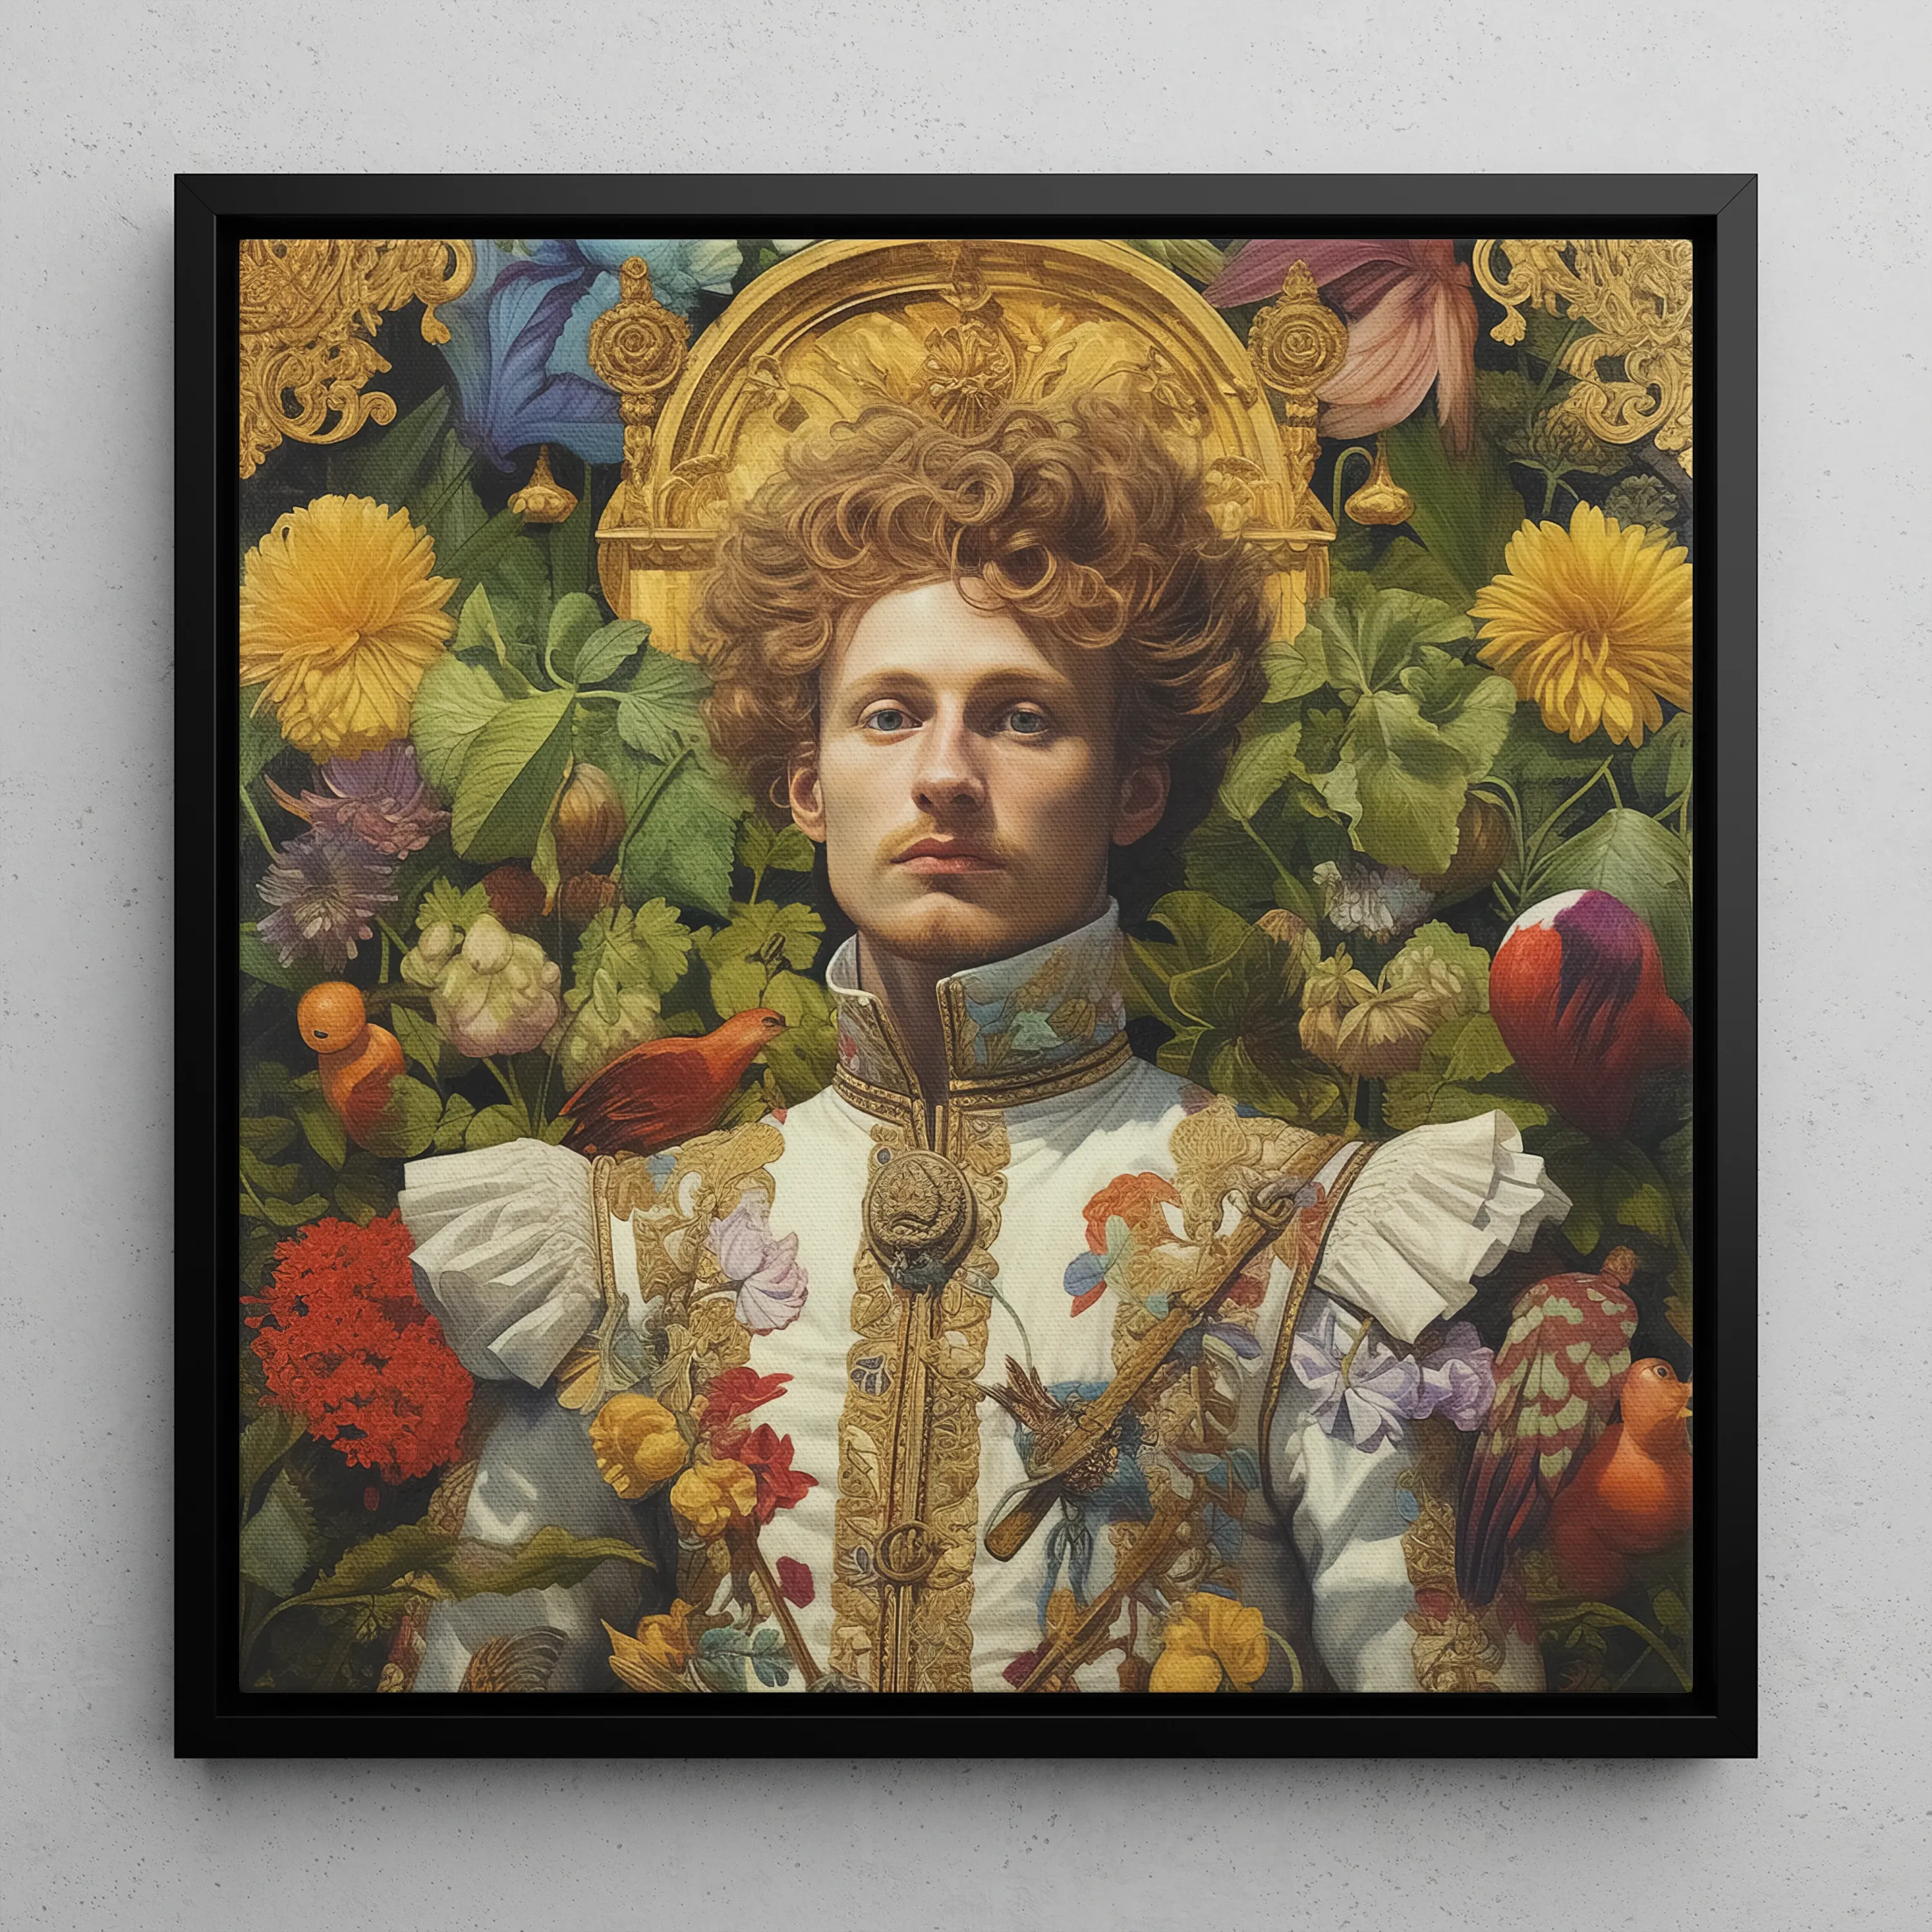 Prince Carlisle - Gay Uk Royalty English Renaissance Canvas - 16’x16’ - Posters Prints & Visual Artwork - Aesthetic Art